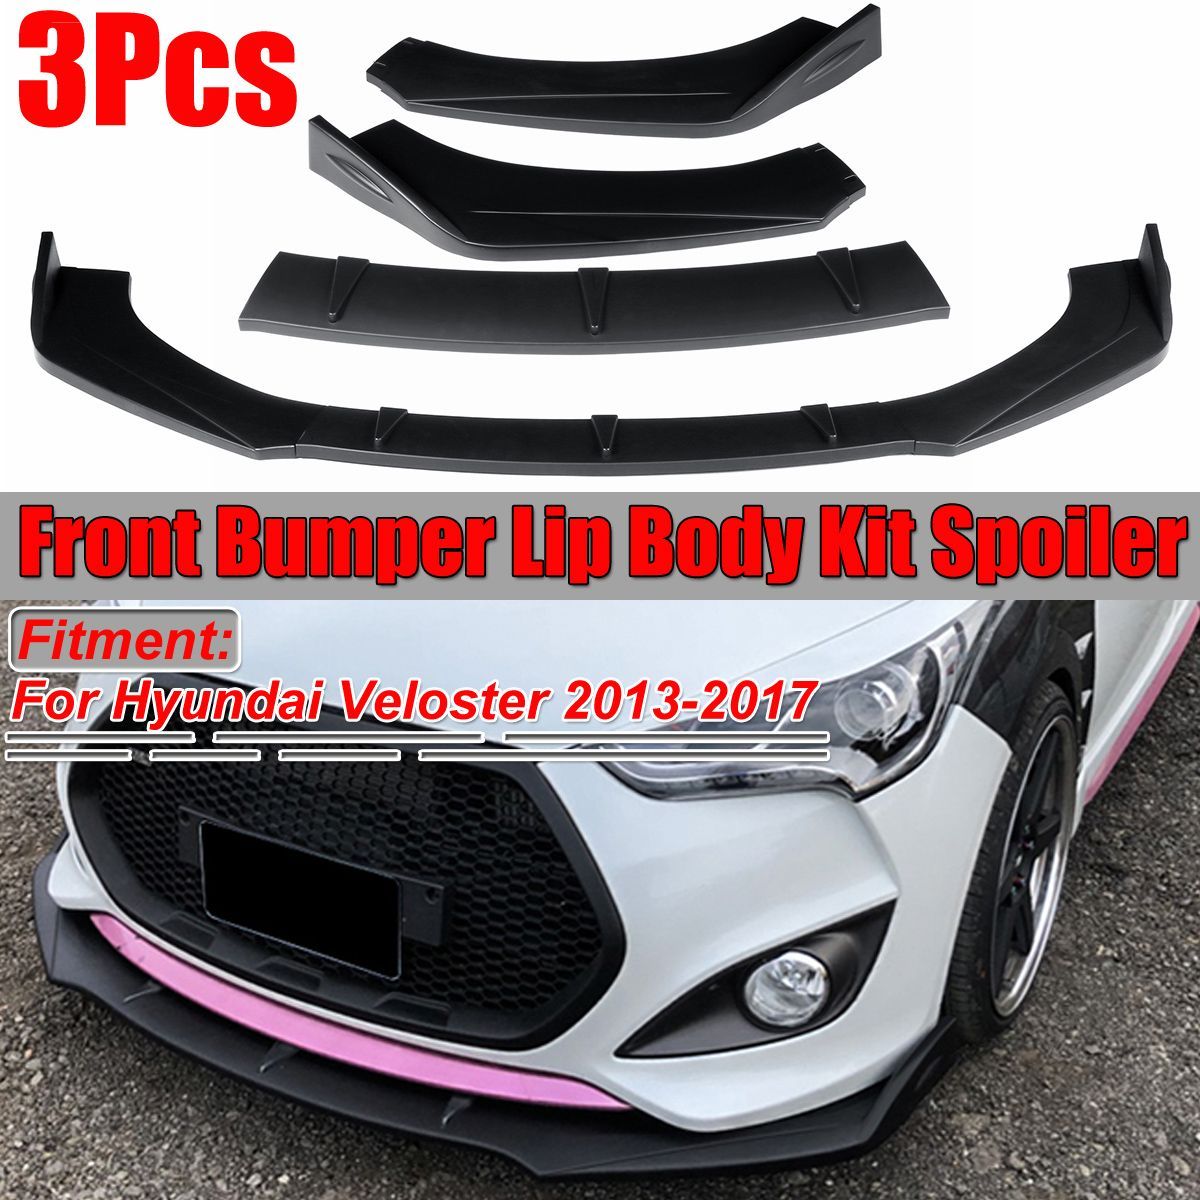 Matte-Black-Front-Bumper-Lip-Protector-Body-Kit-Spoiler-For-Hyundai-Veloster-2013-2017-1573208